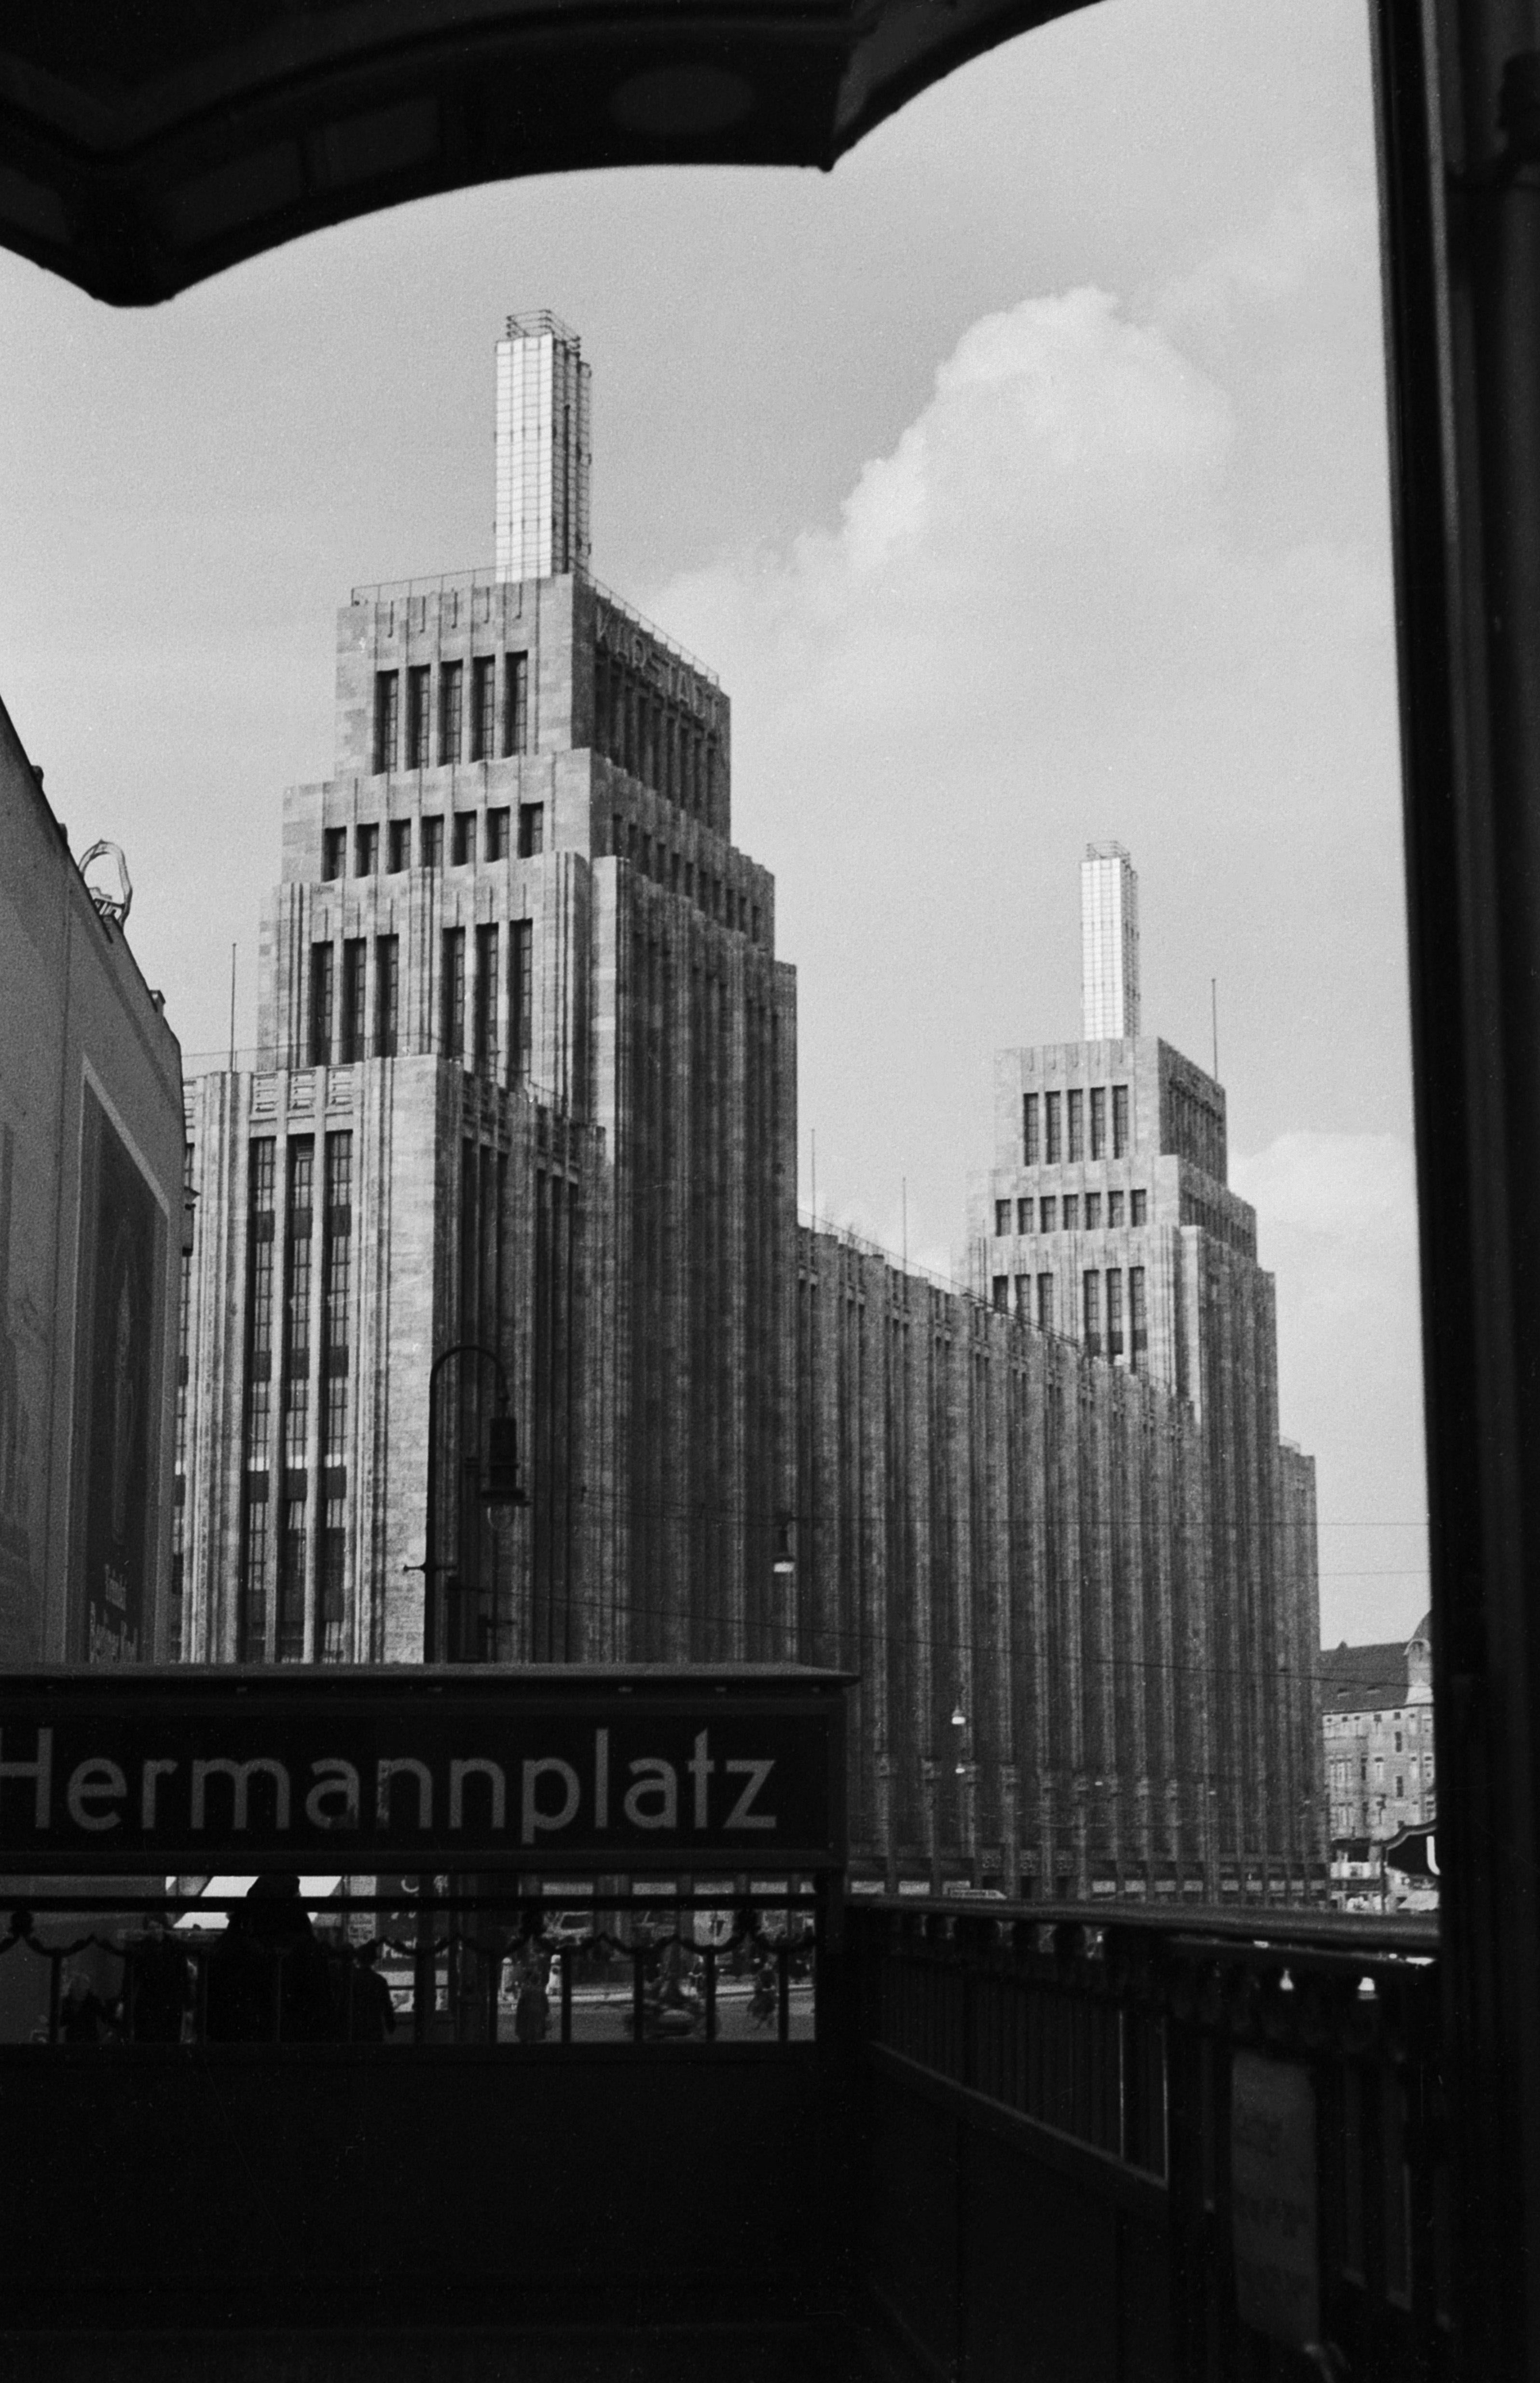 Landscape Photograph Heinz Pollmann - Karstadt-Haus à Hermannplatz, Berlin, 1937, Mauritius Publishing